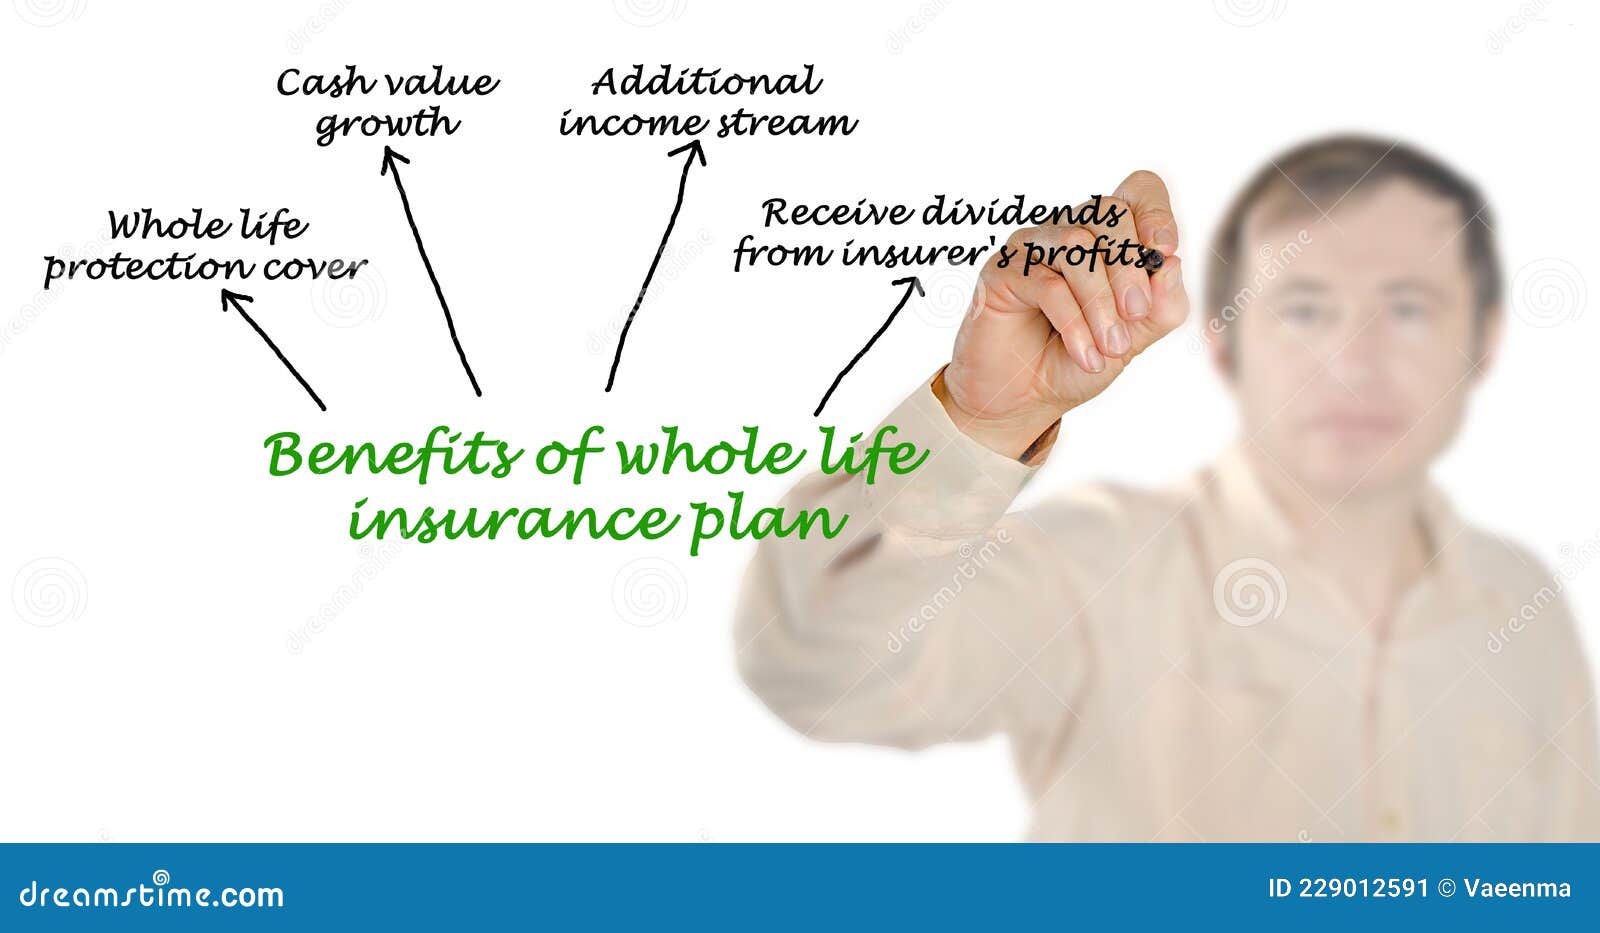 benefits of whole life insurance plan